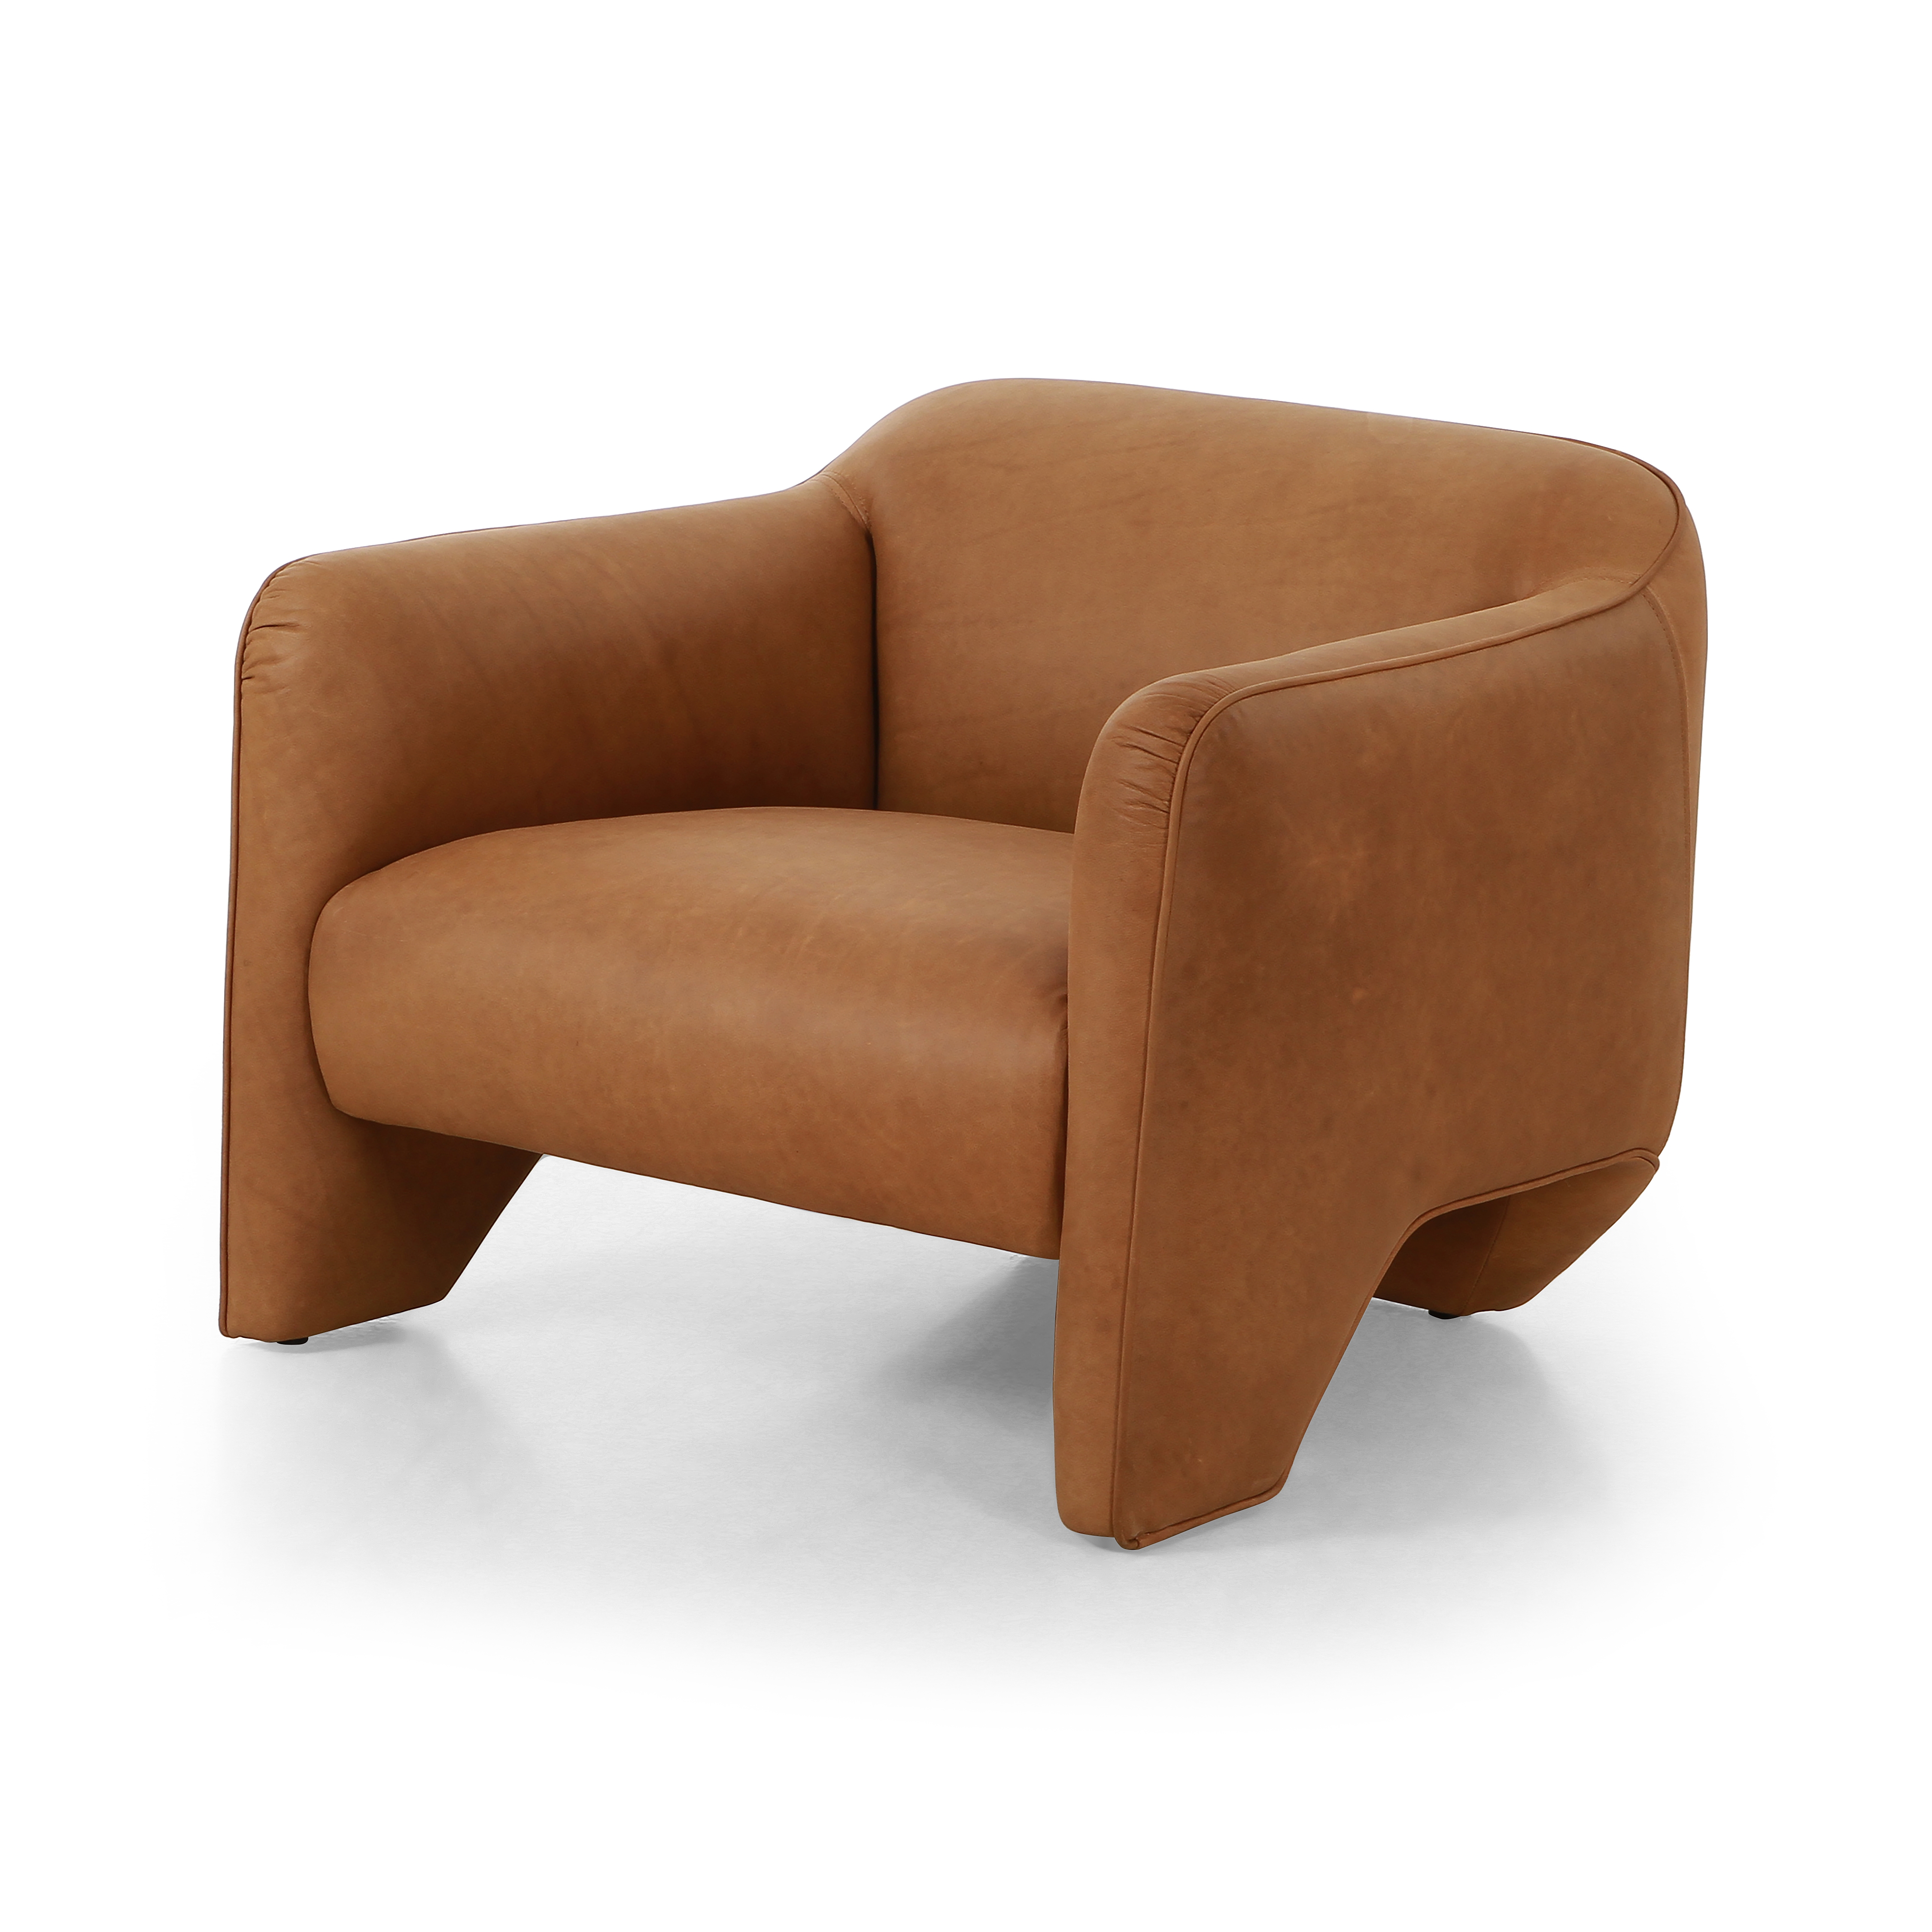 Daria Chair-Eucapel Cognac - Image 0